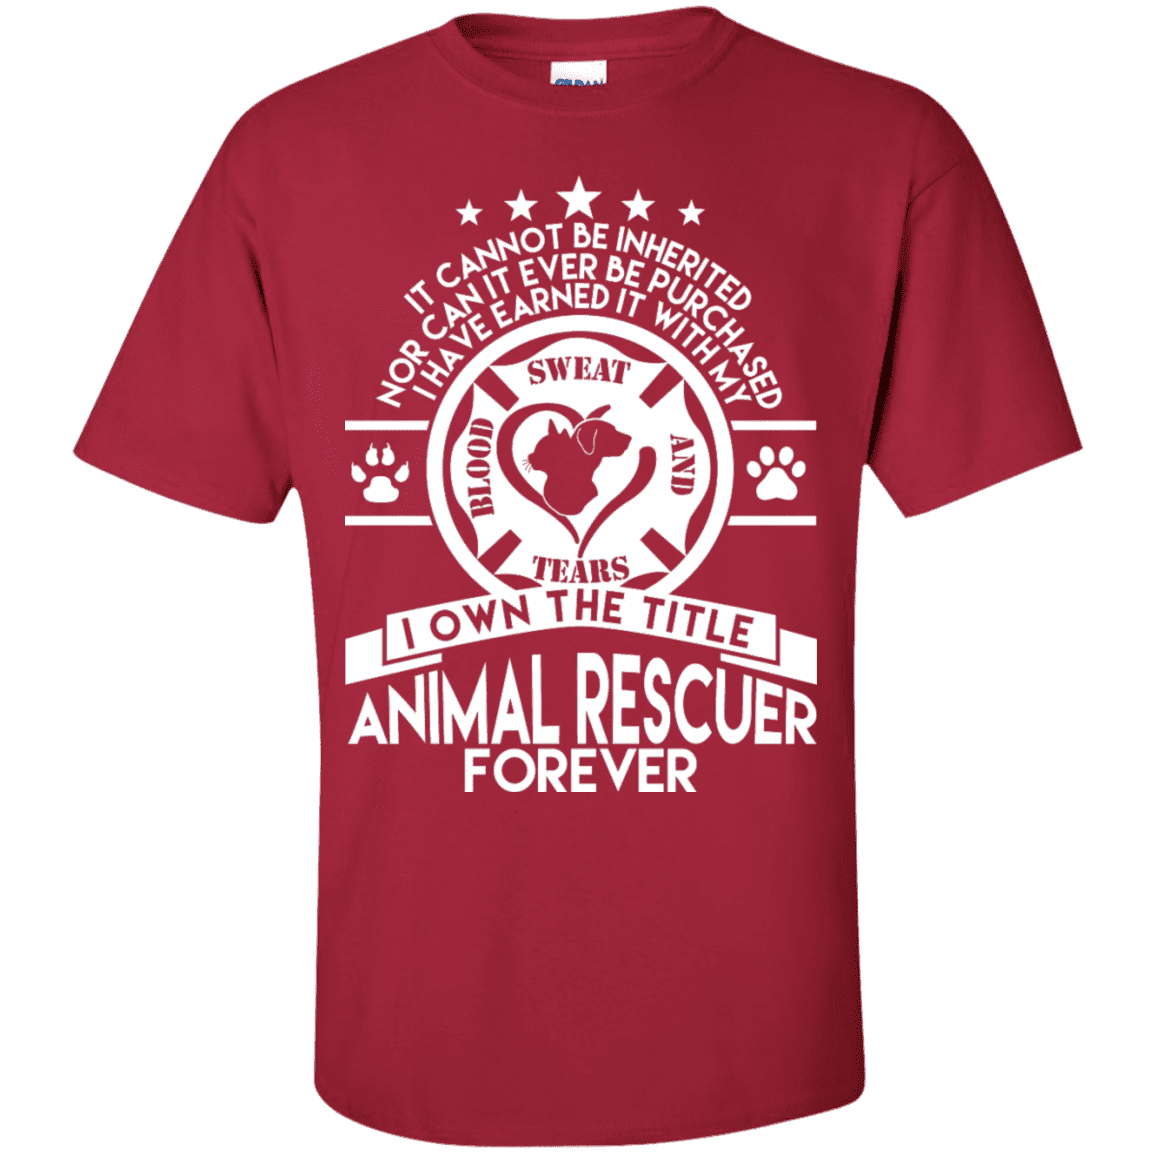 Animal Rescuer Forever - T Shirt.